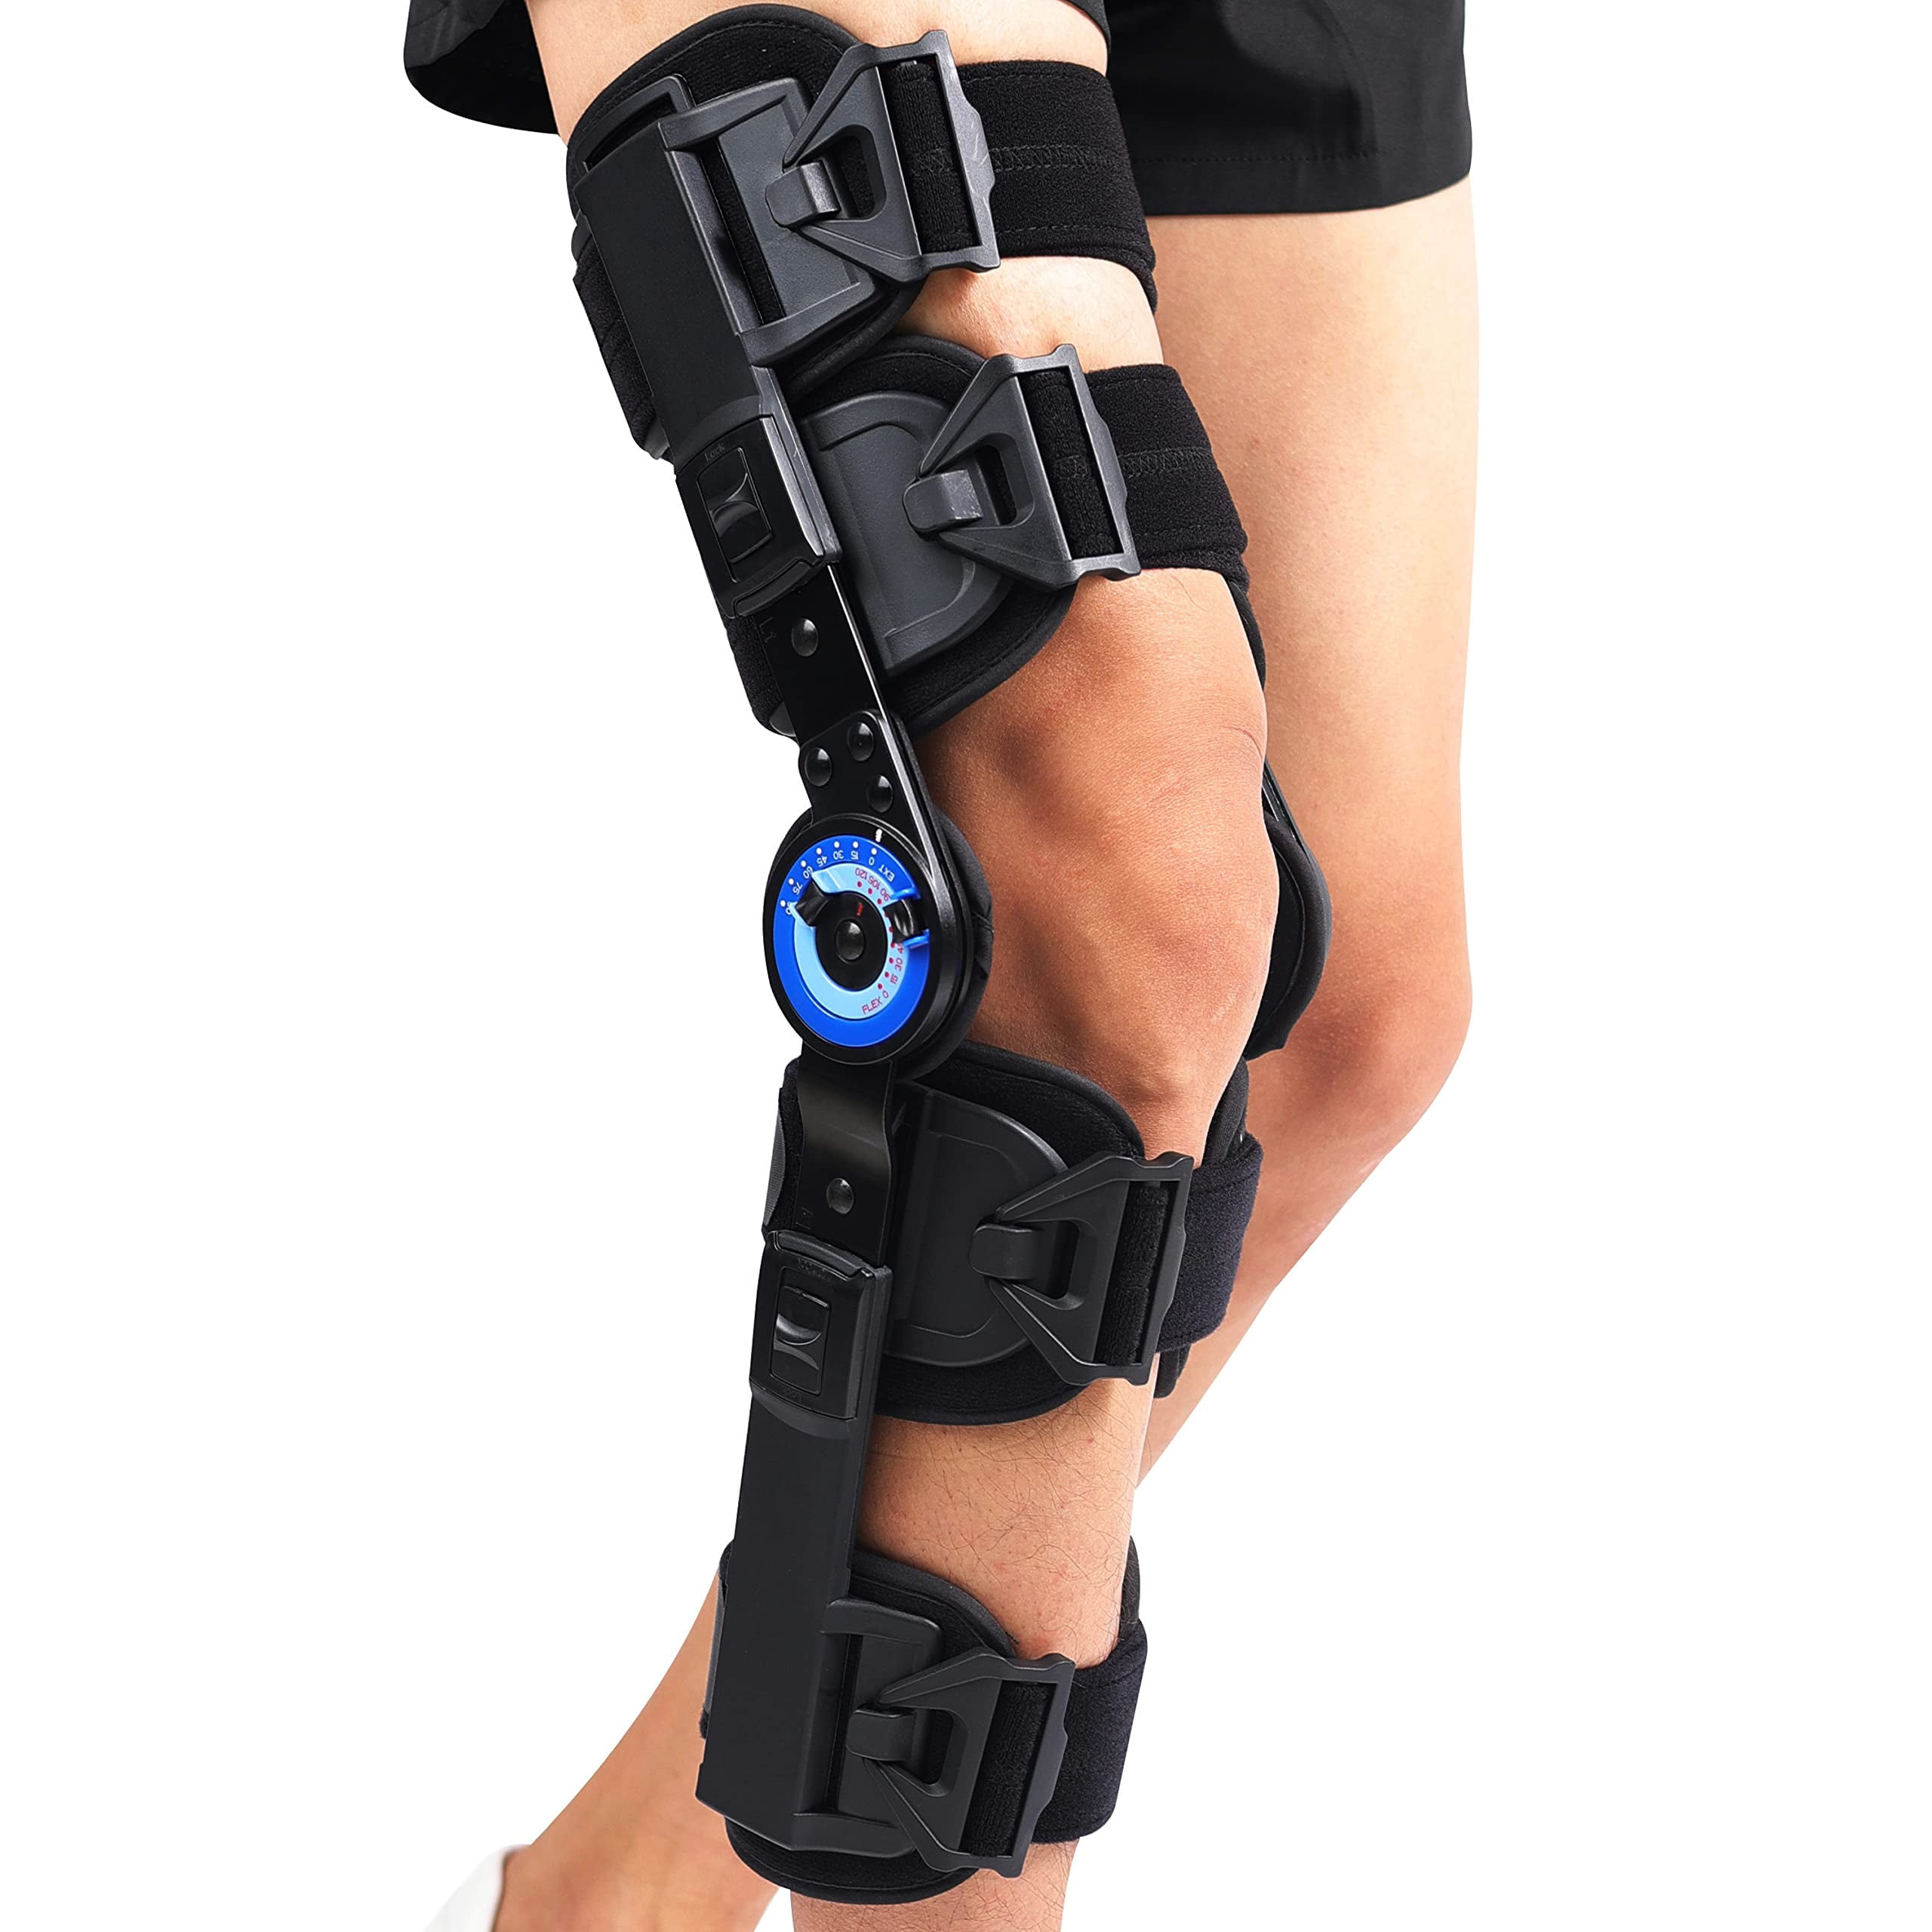 Wrap Around Hinged Knee Brace by Advanced Orthopaedics : Knee Brace